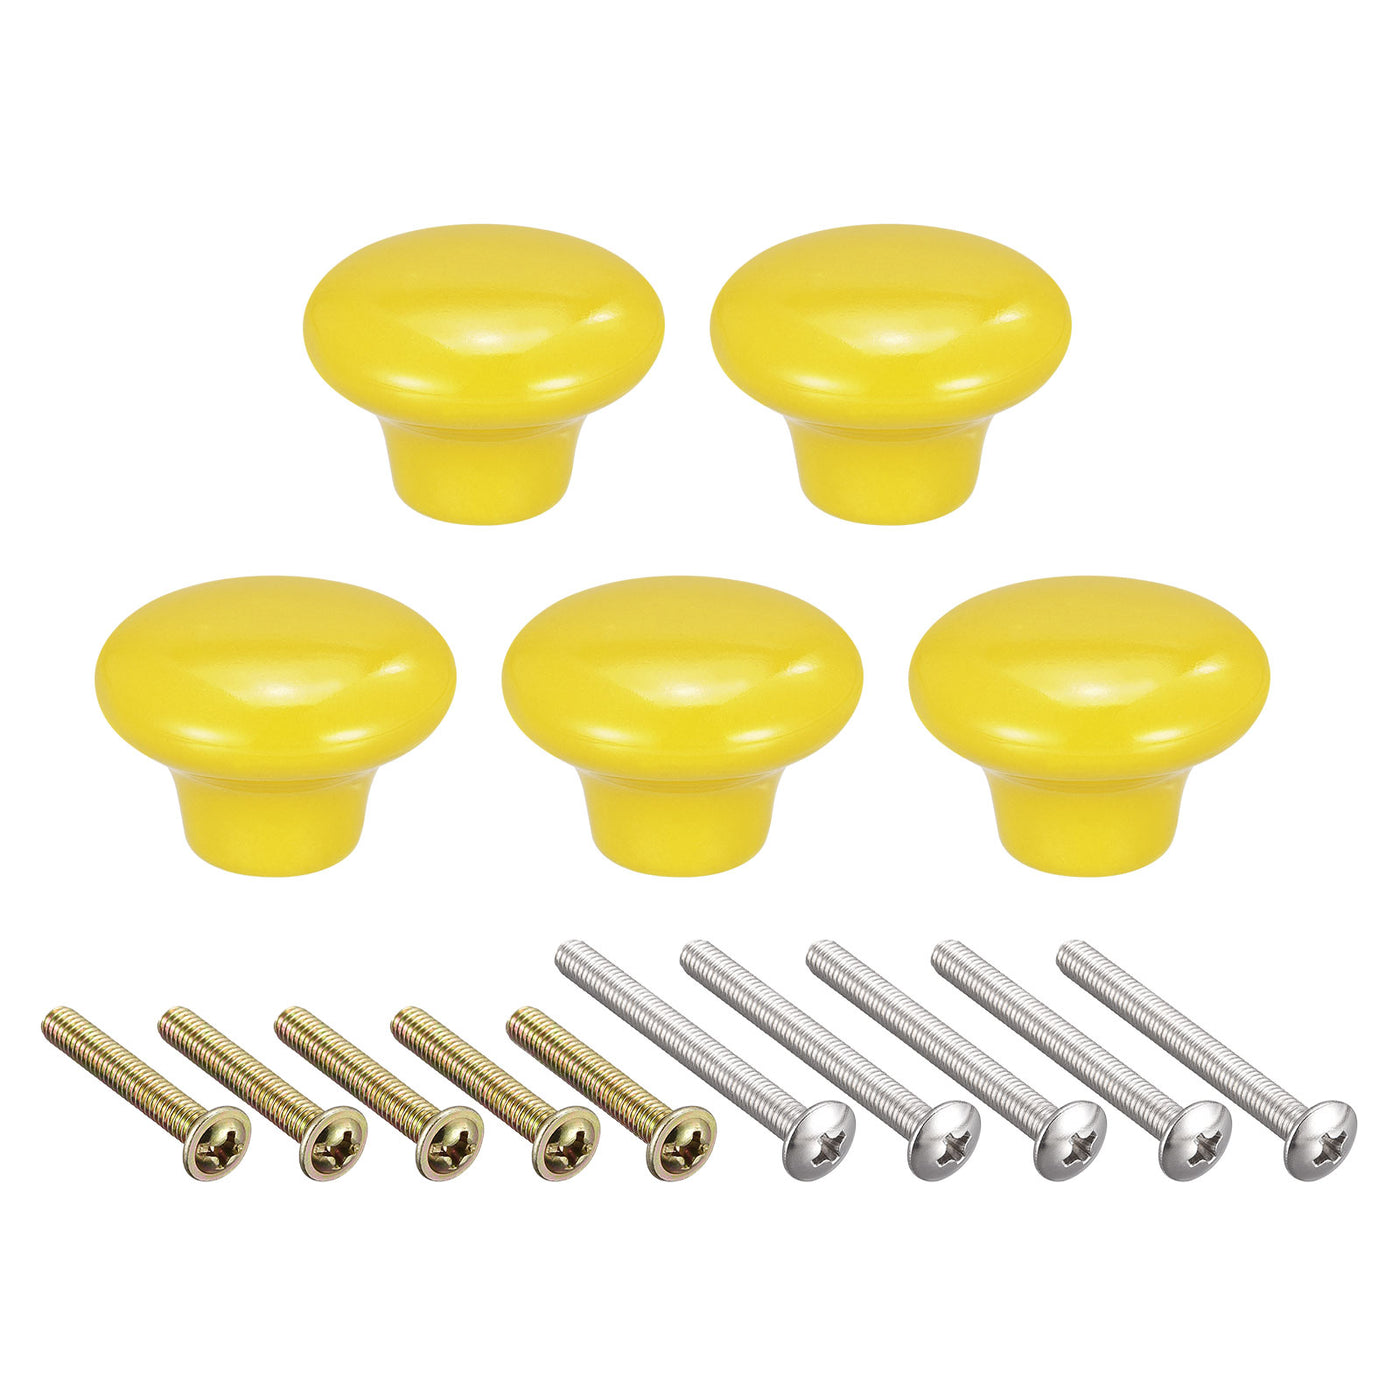 uxcell Uxcell 38x28mm Ceramic Drawer Knobs, 5pcs Mushroom Shape Door Pull Handles Yellow